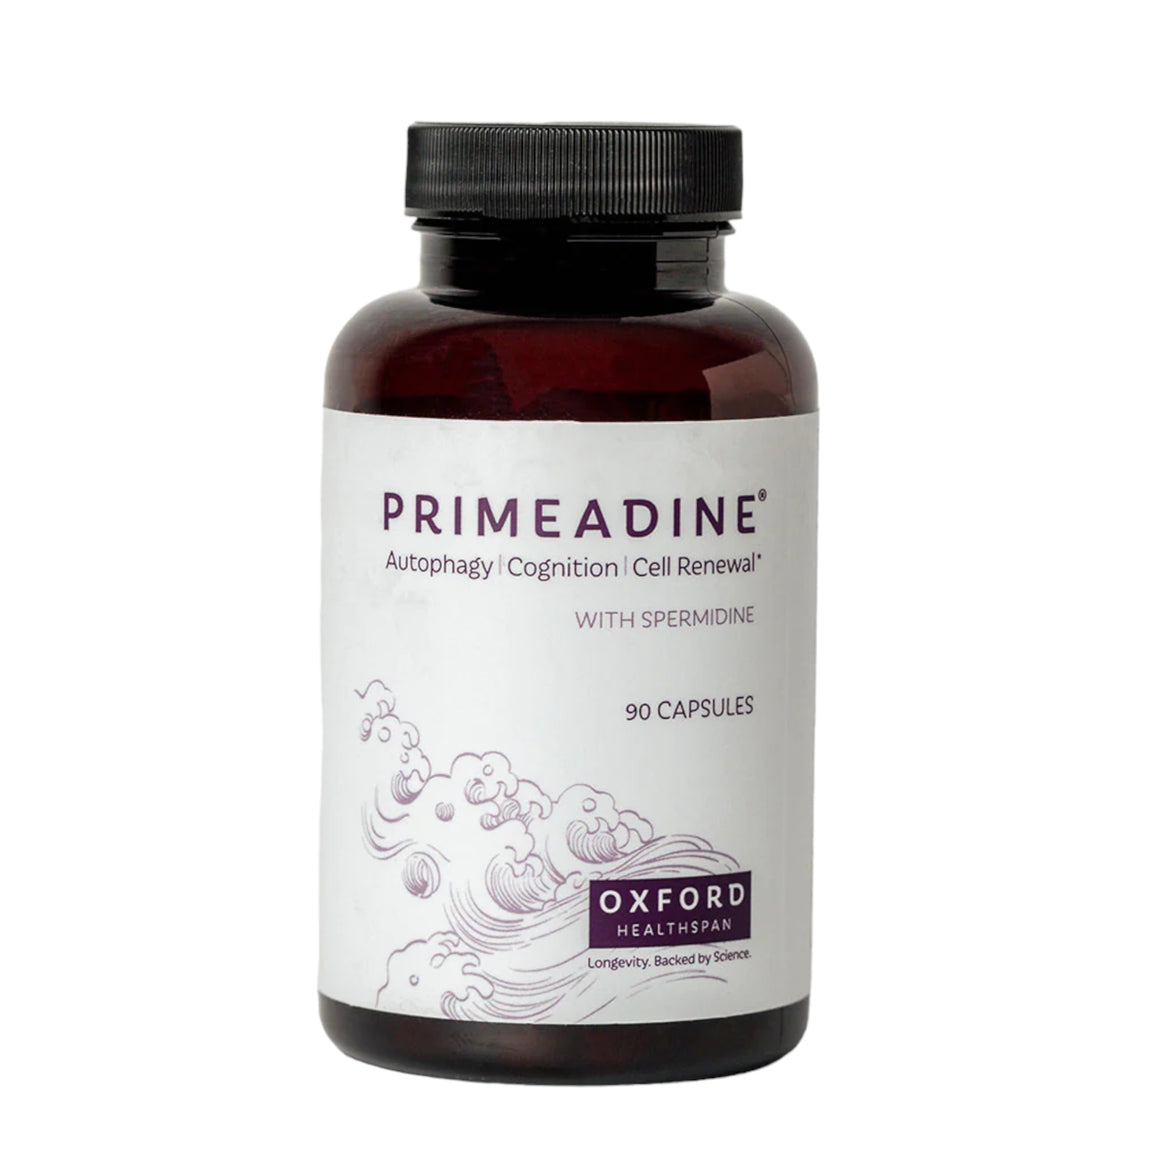 Primeadine® Original Spermidine Supplement - Oxford Healthspan